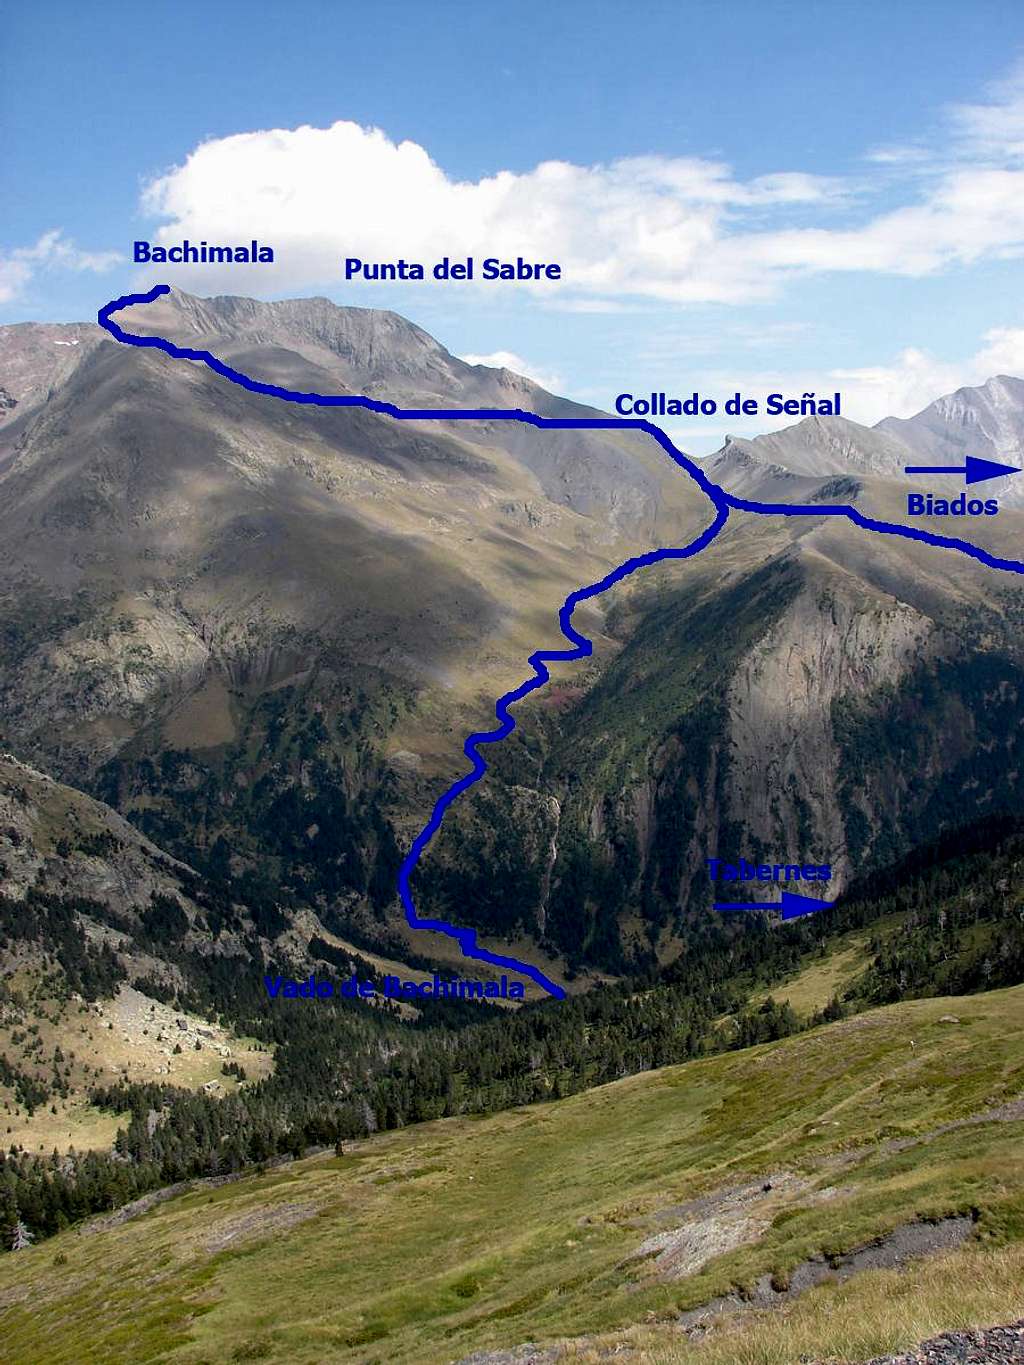 Routes to Bachimala